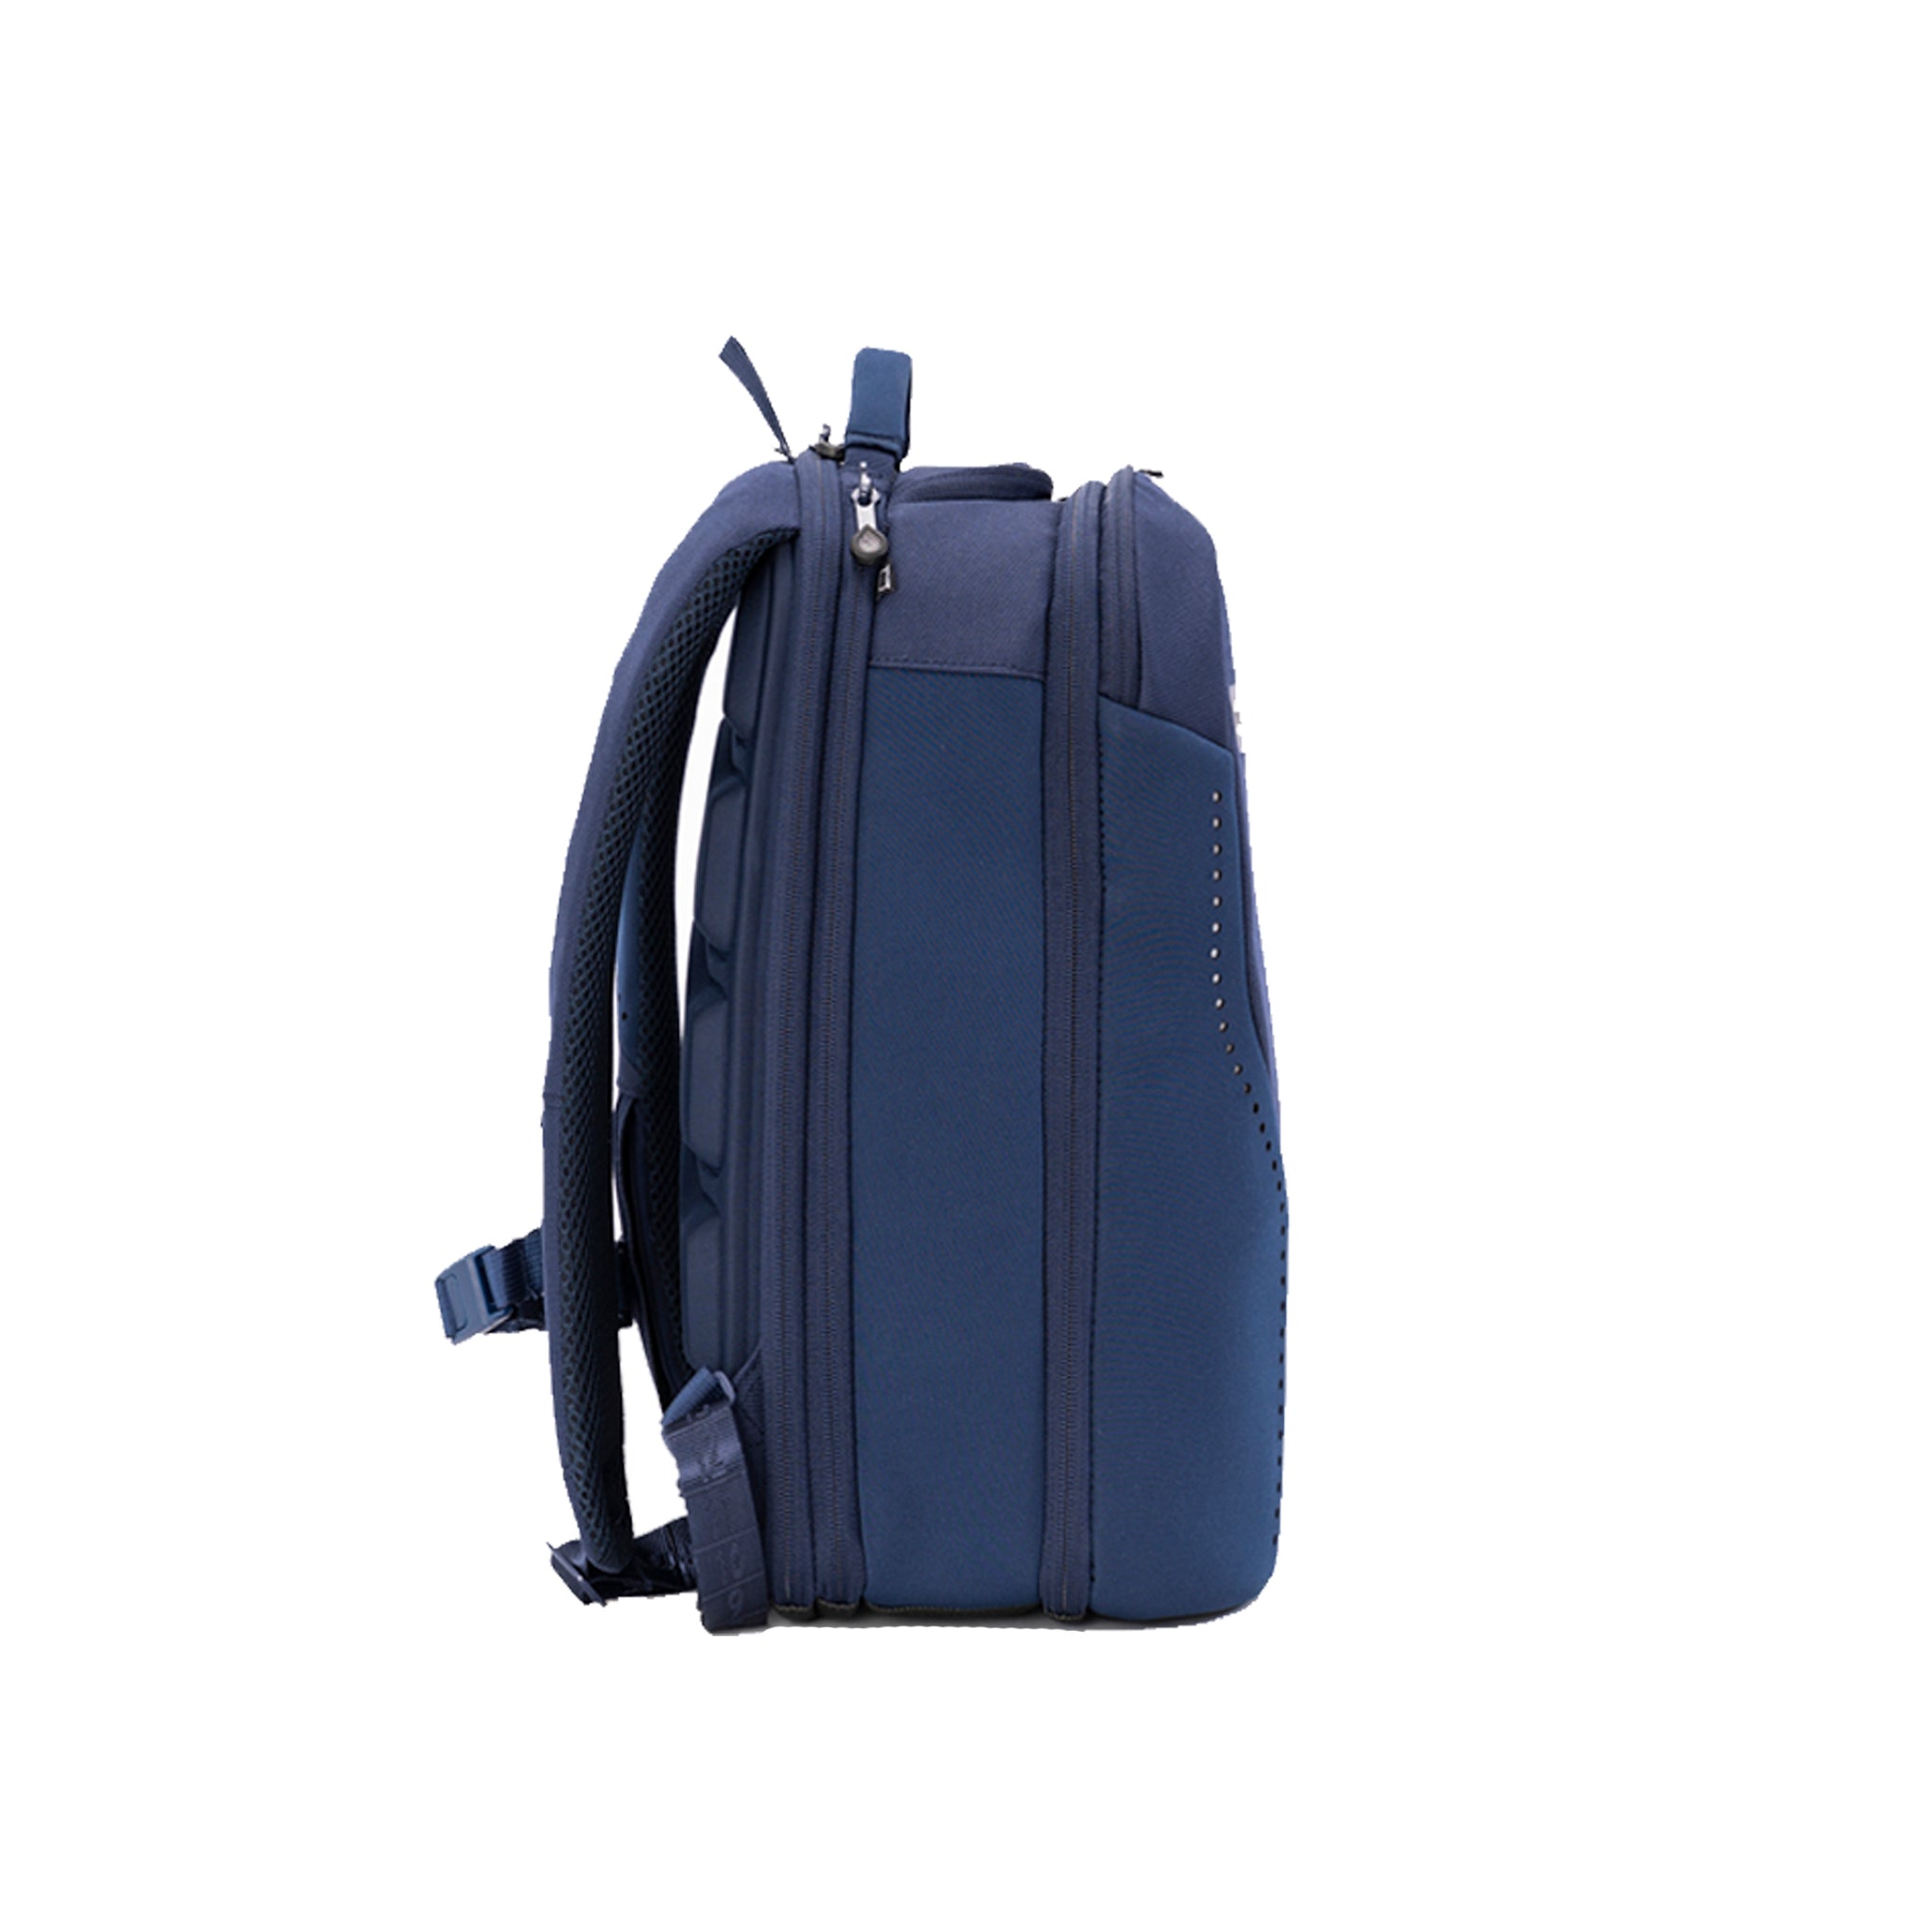 MUB TRAVELER MEDIUM Classic Blue - The BiarritzI Deluxe Travel Backpack for Men